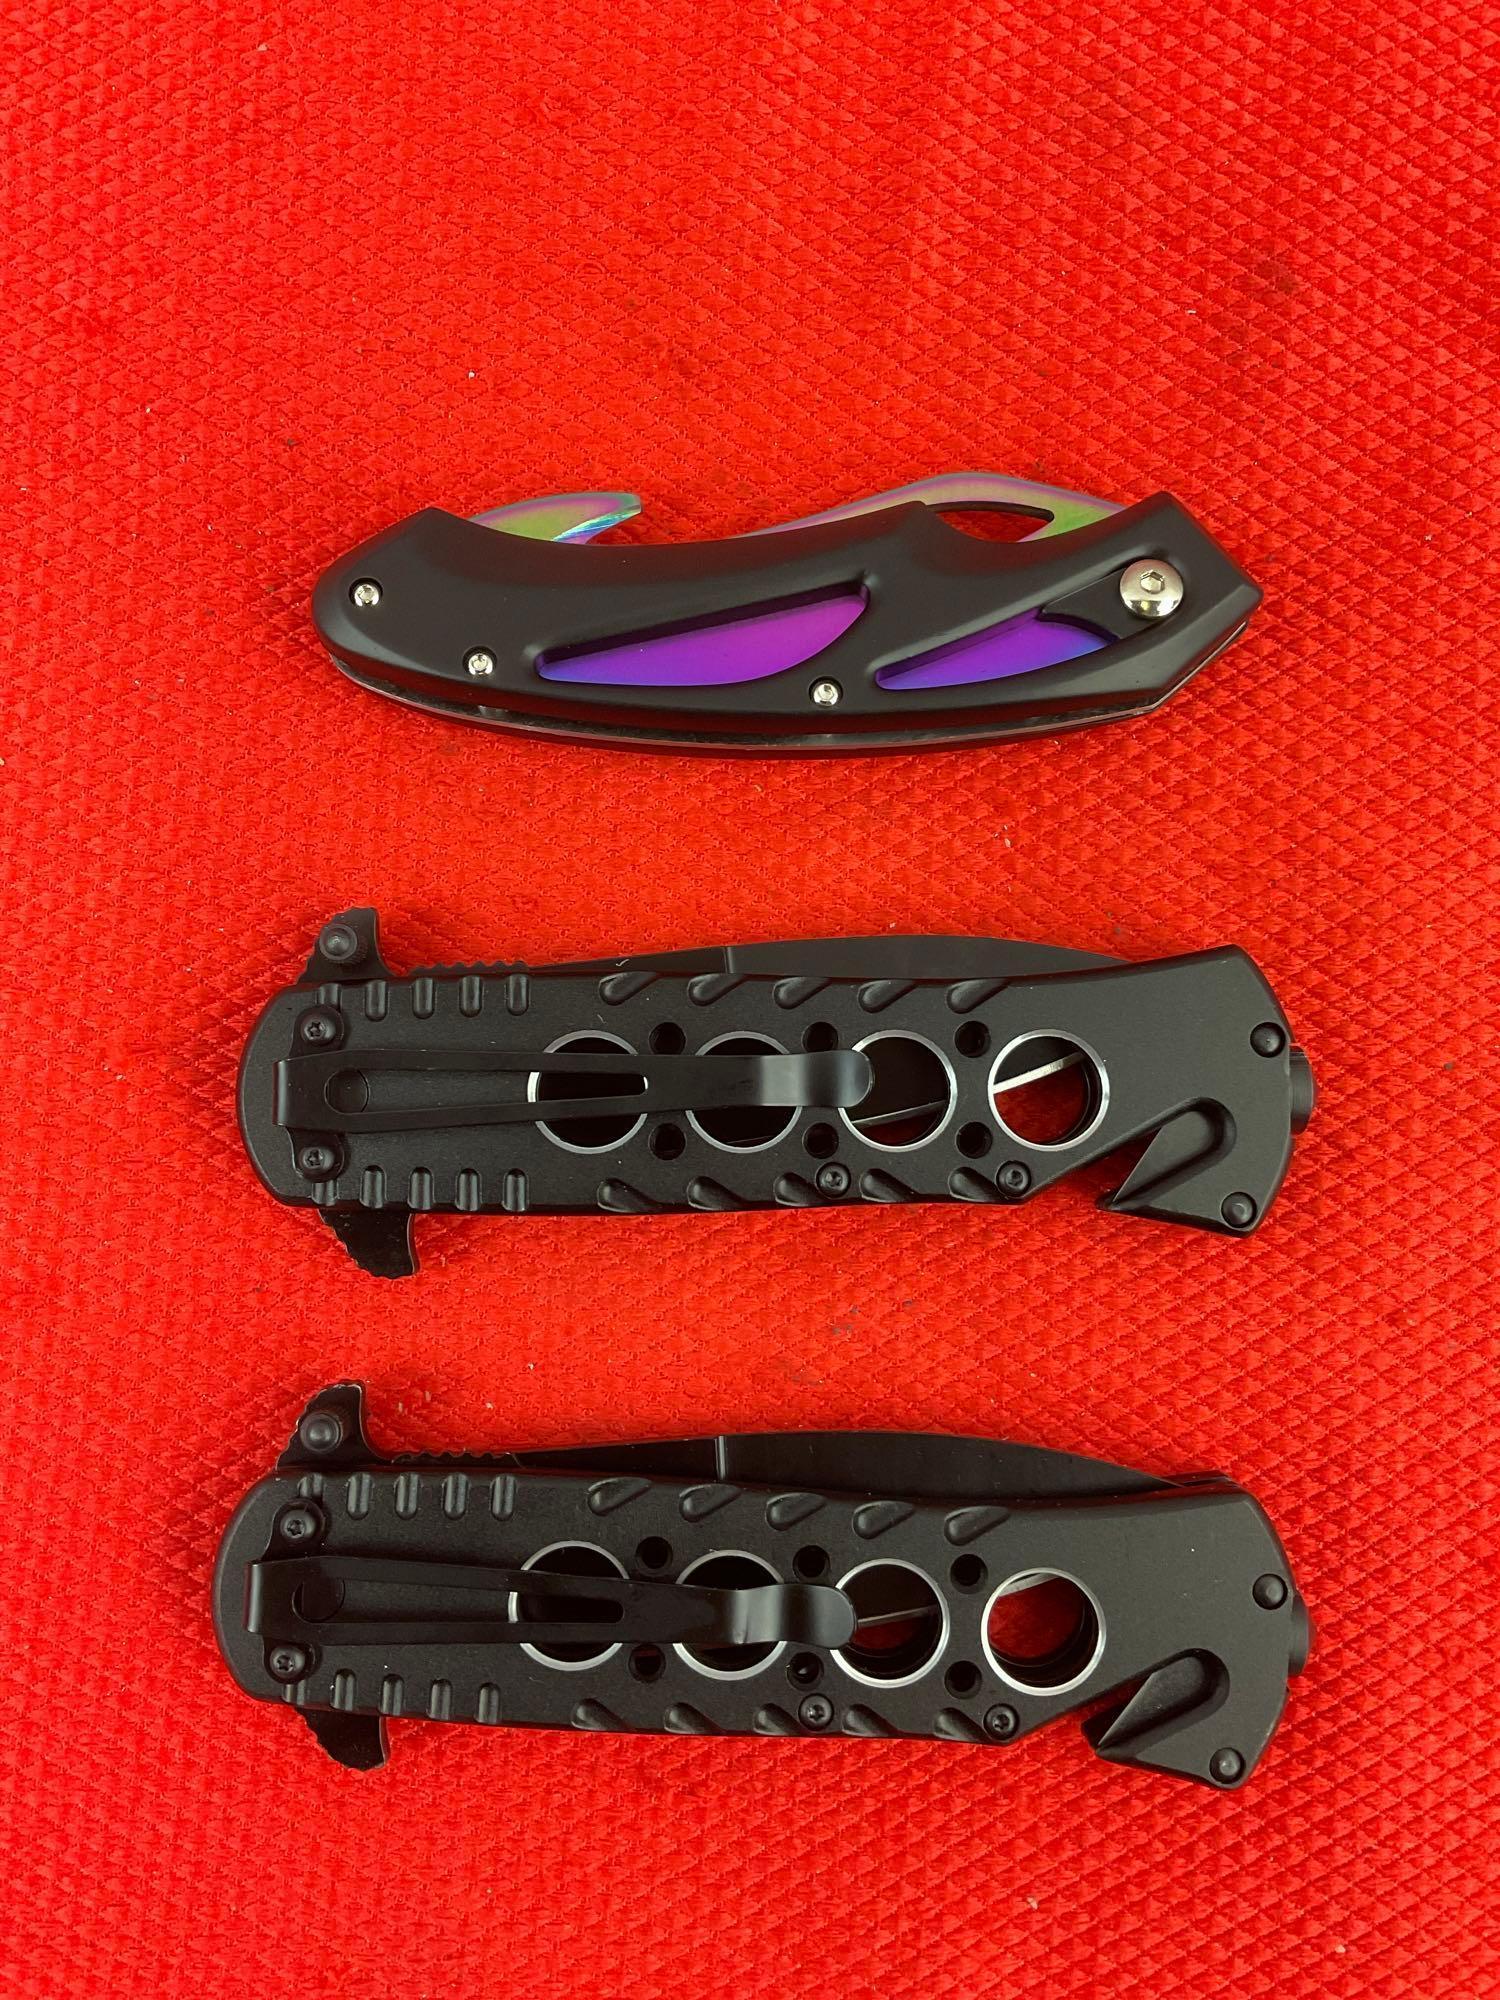 3 pcs Super Knife Steel Folding Blade Pocket Knives Models 210398, YC-529BMR & YC-529BSP. NIB. See